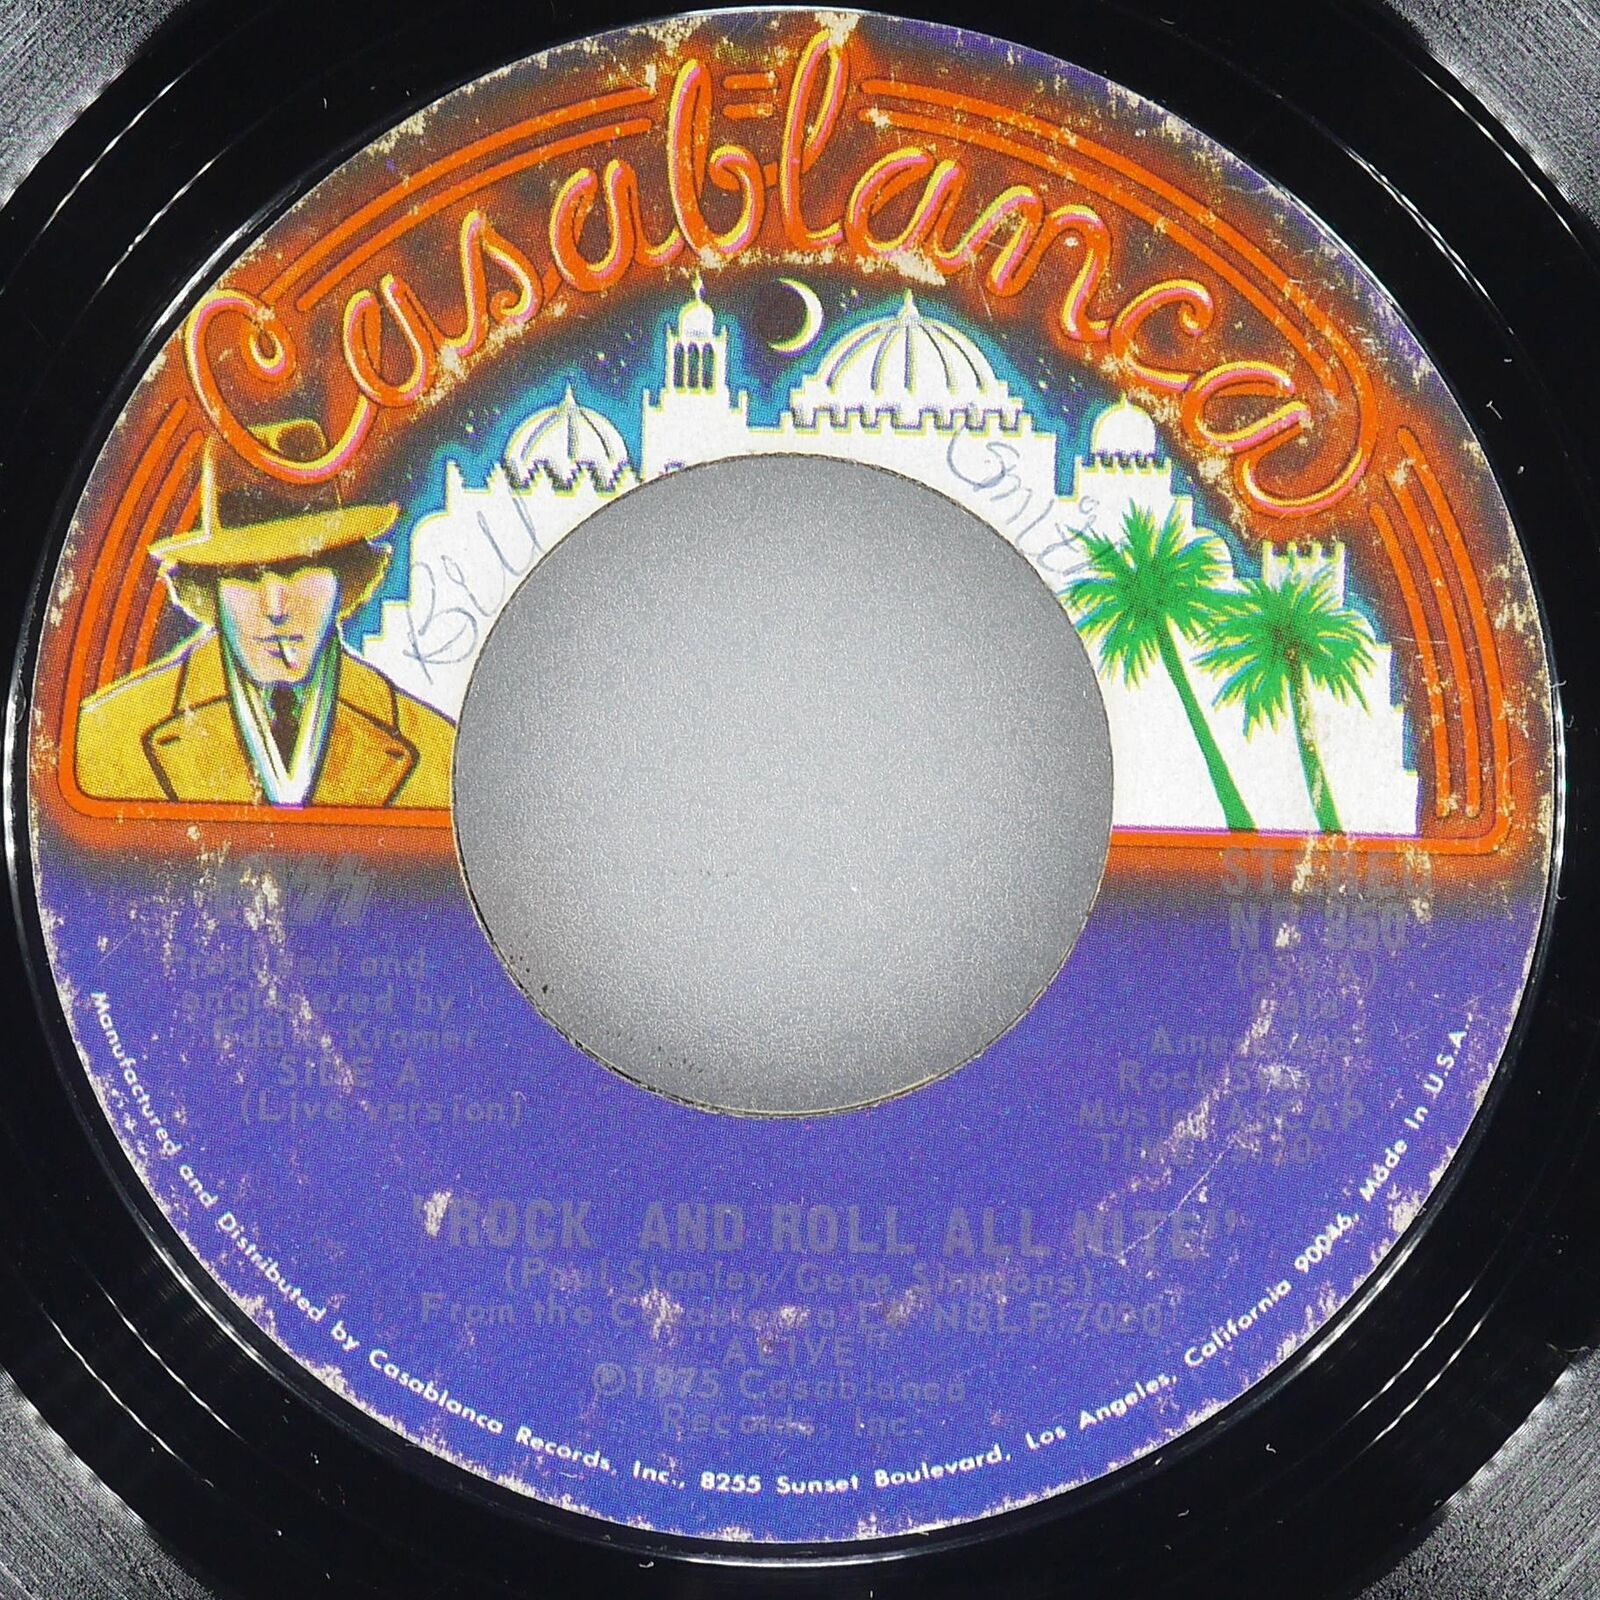 KISS Rock And Roll All Nite CASABLANCA NB 850 VG 45rpm 7" 1976 Hard Rock